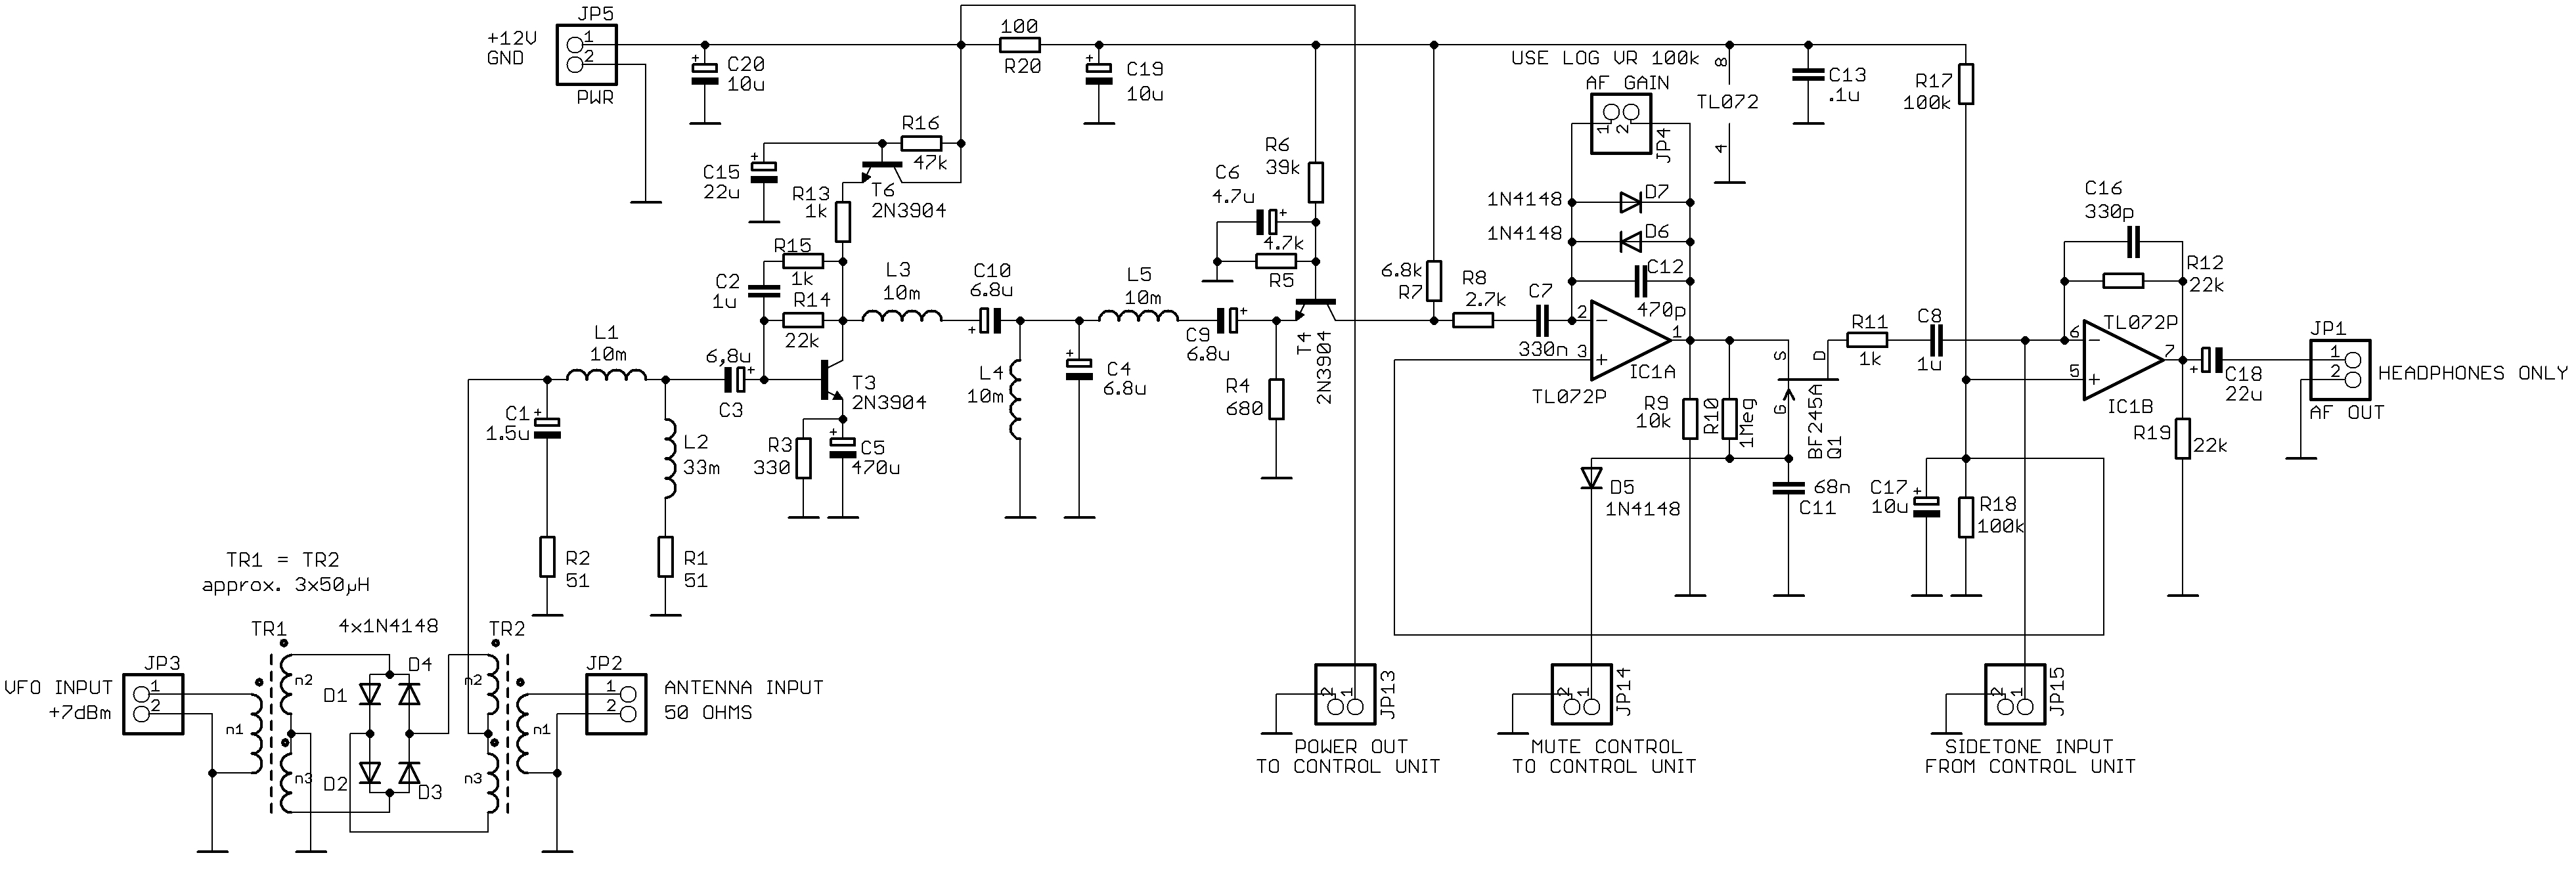 Circuit Diagram Type 002